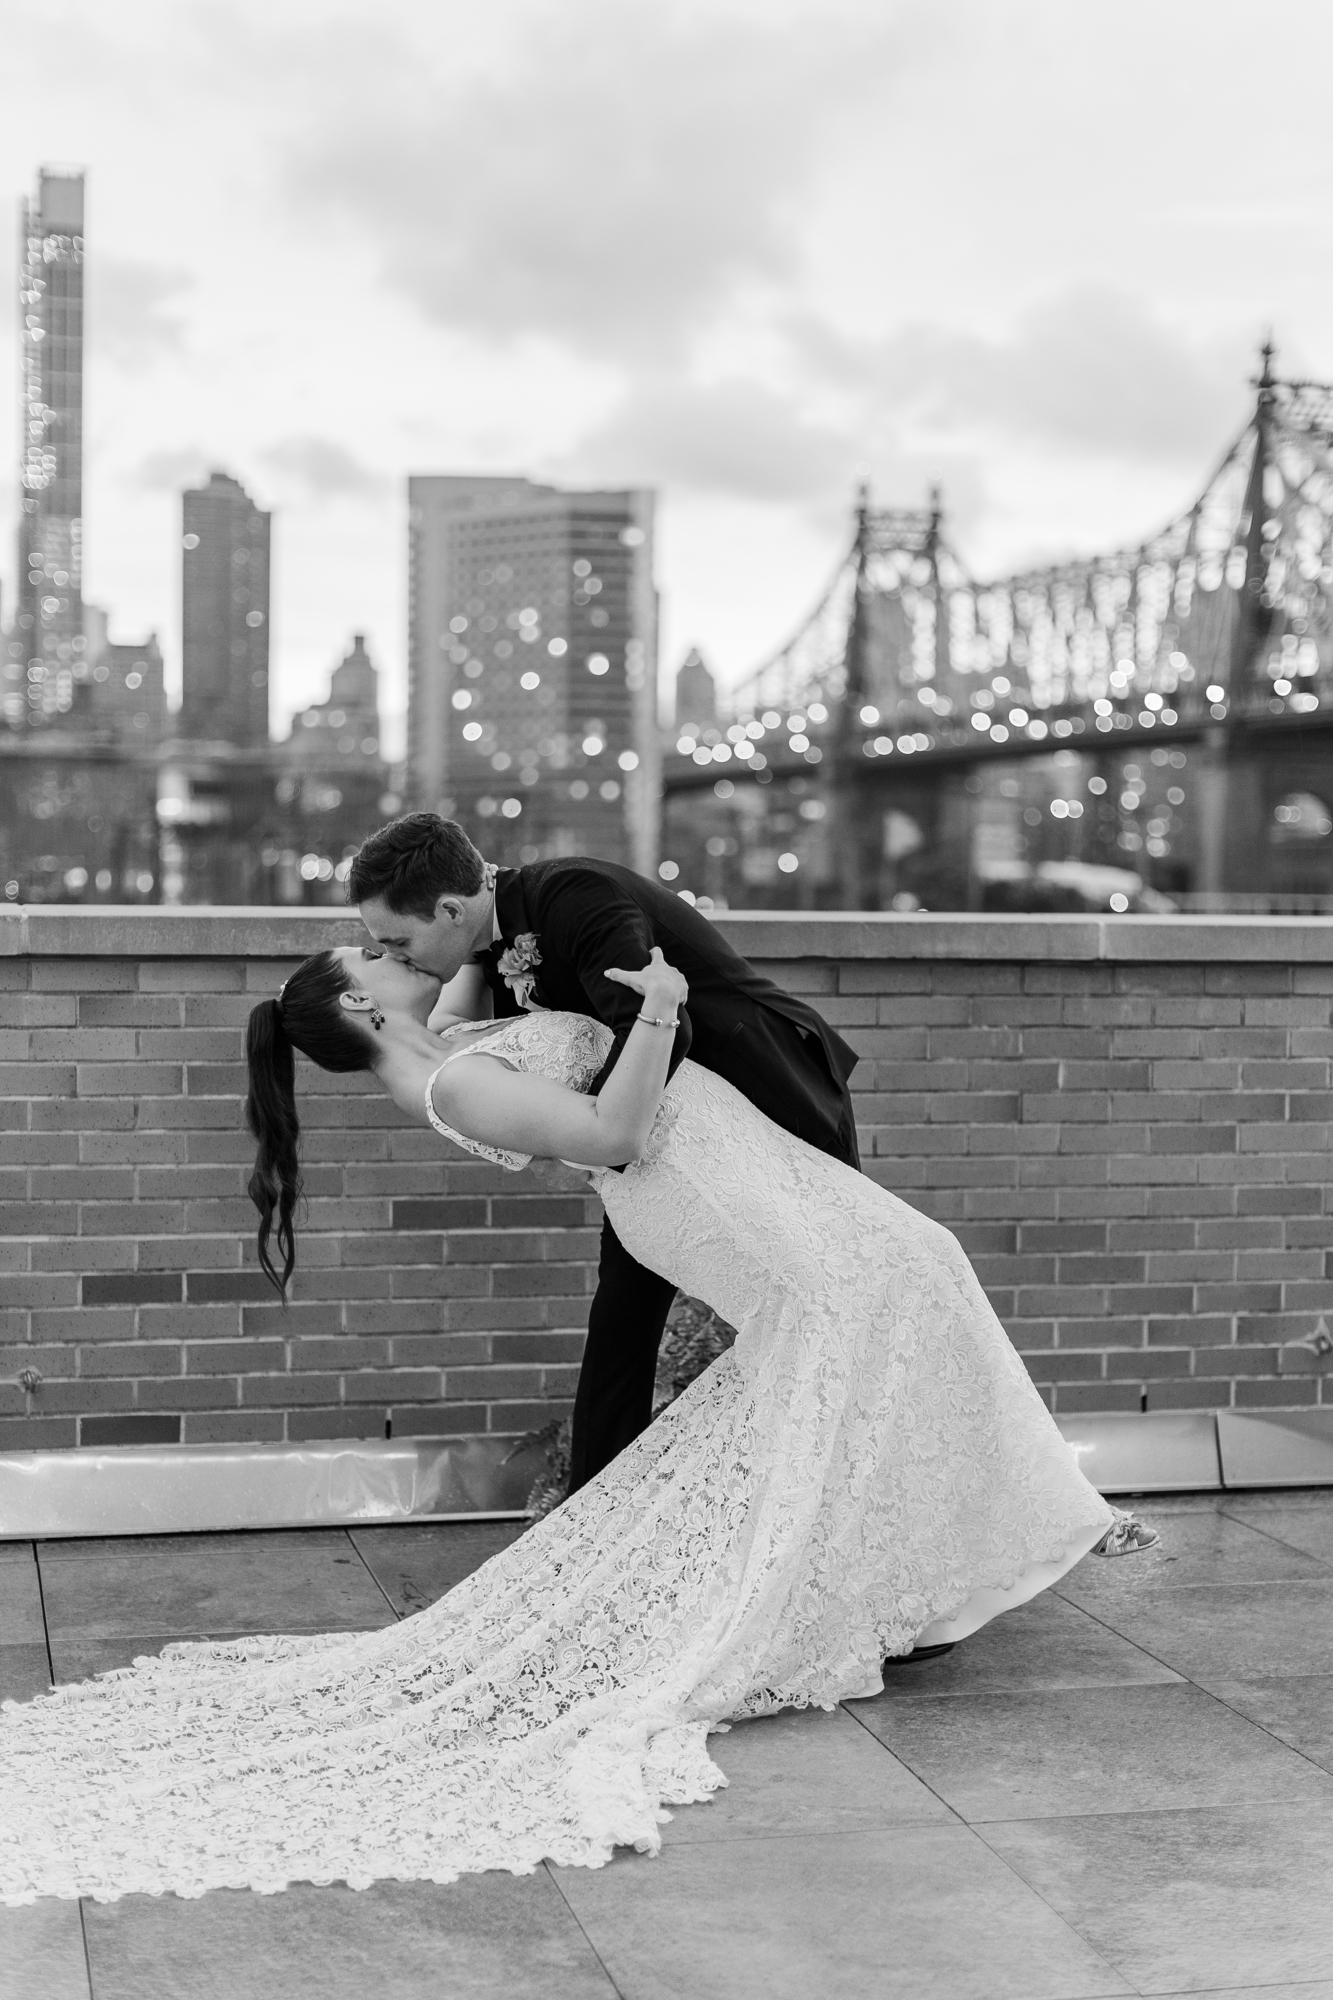 Classic Bordone Wedding Photos in Long Island City with NYC Skyline